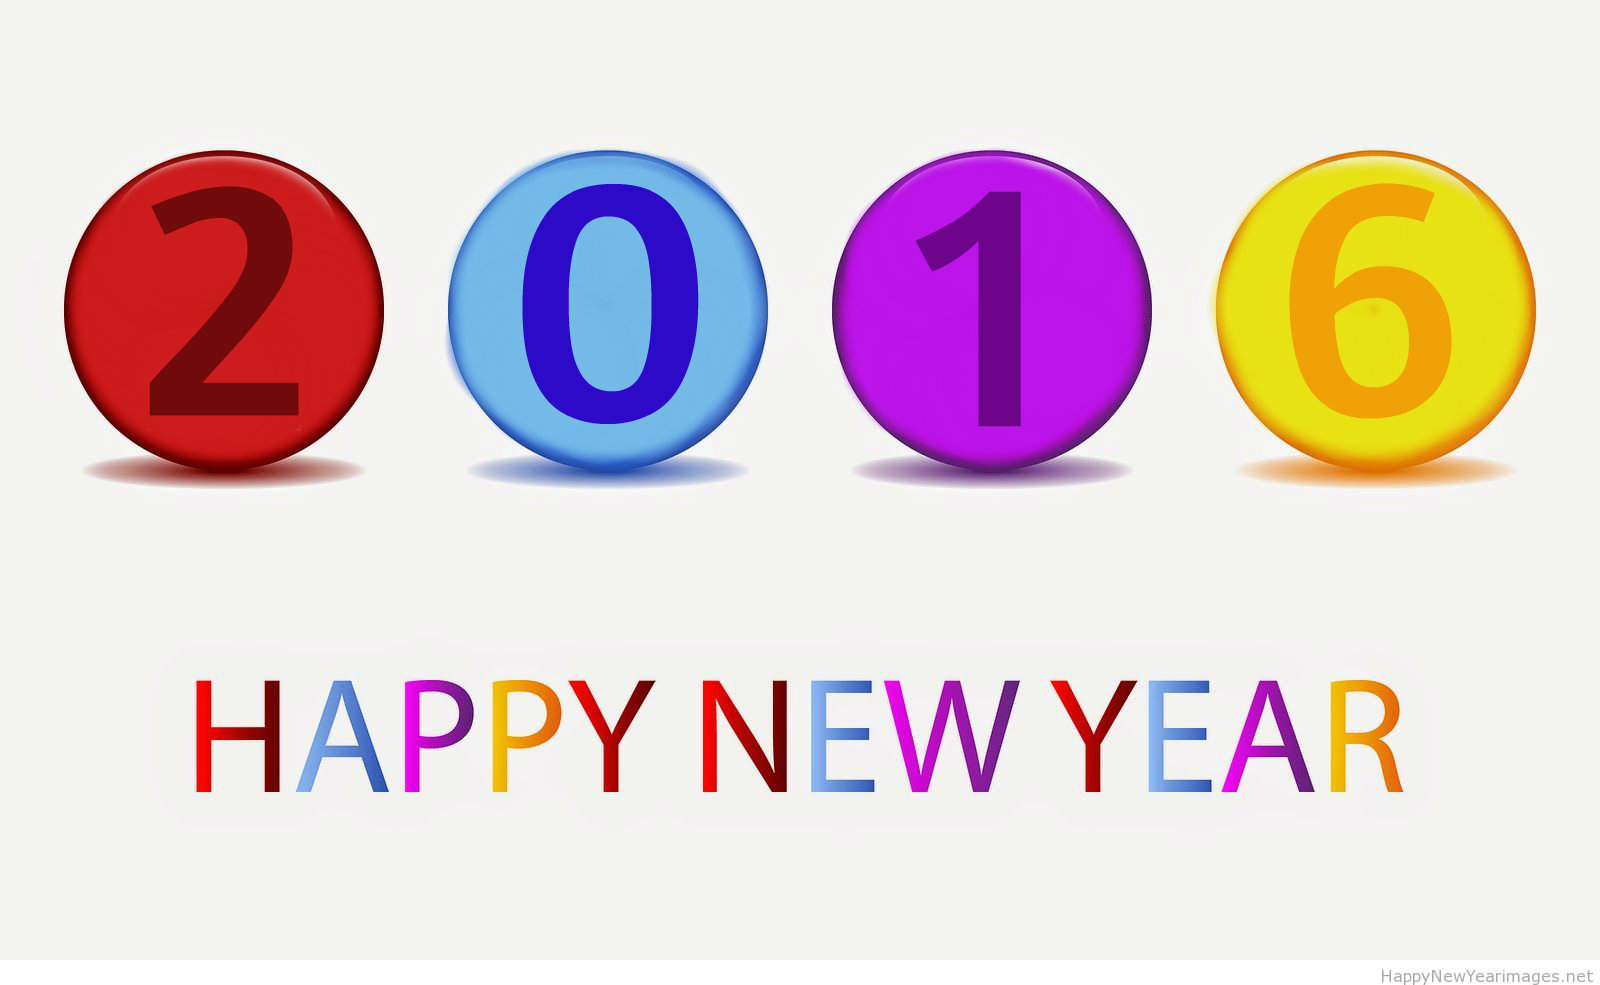 2016 New Year Image